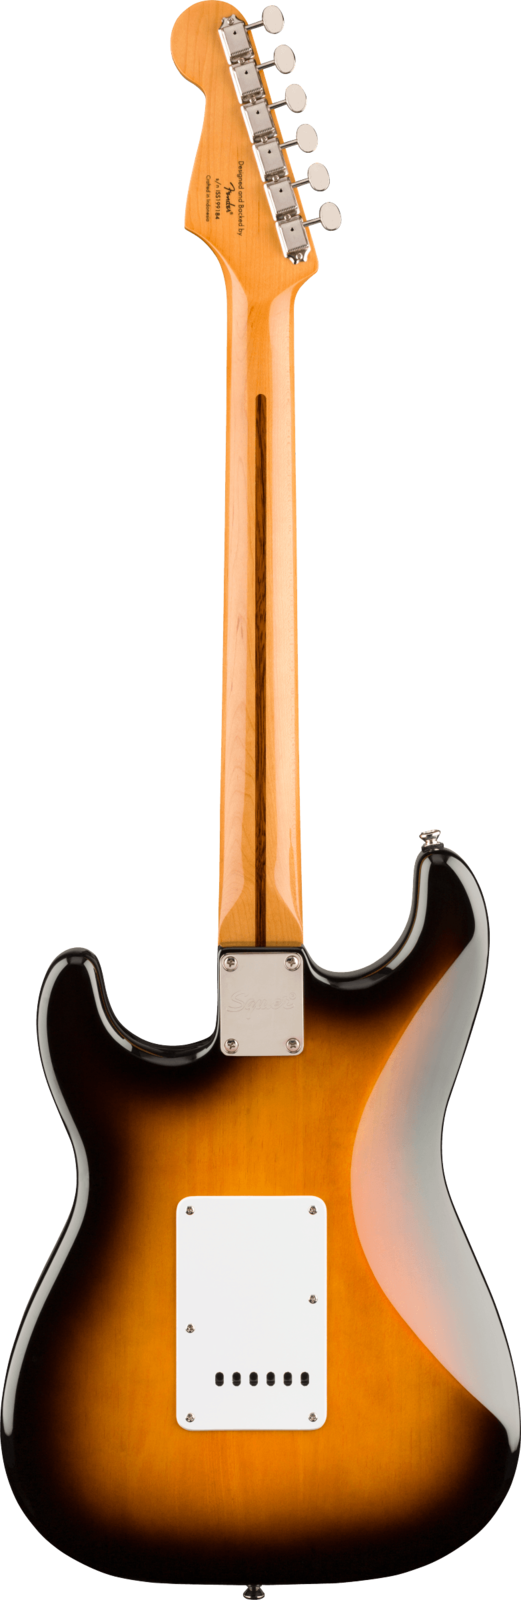 Squier Classic Vibe '50s Stratocaster 2-Color Sunburst